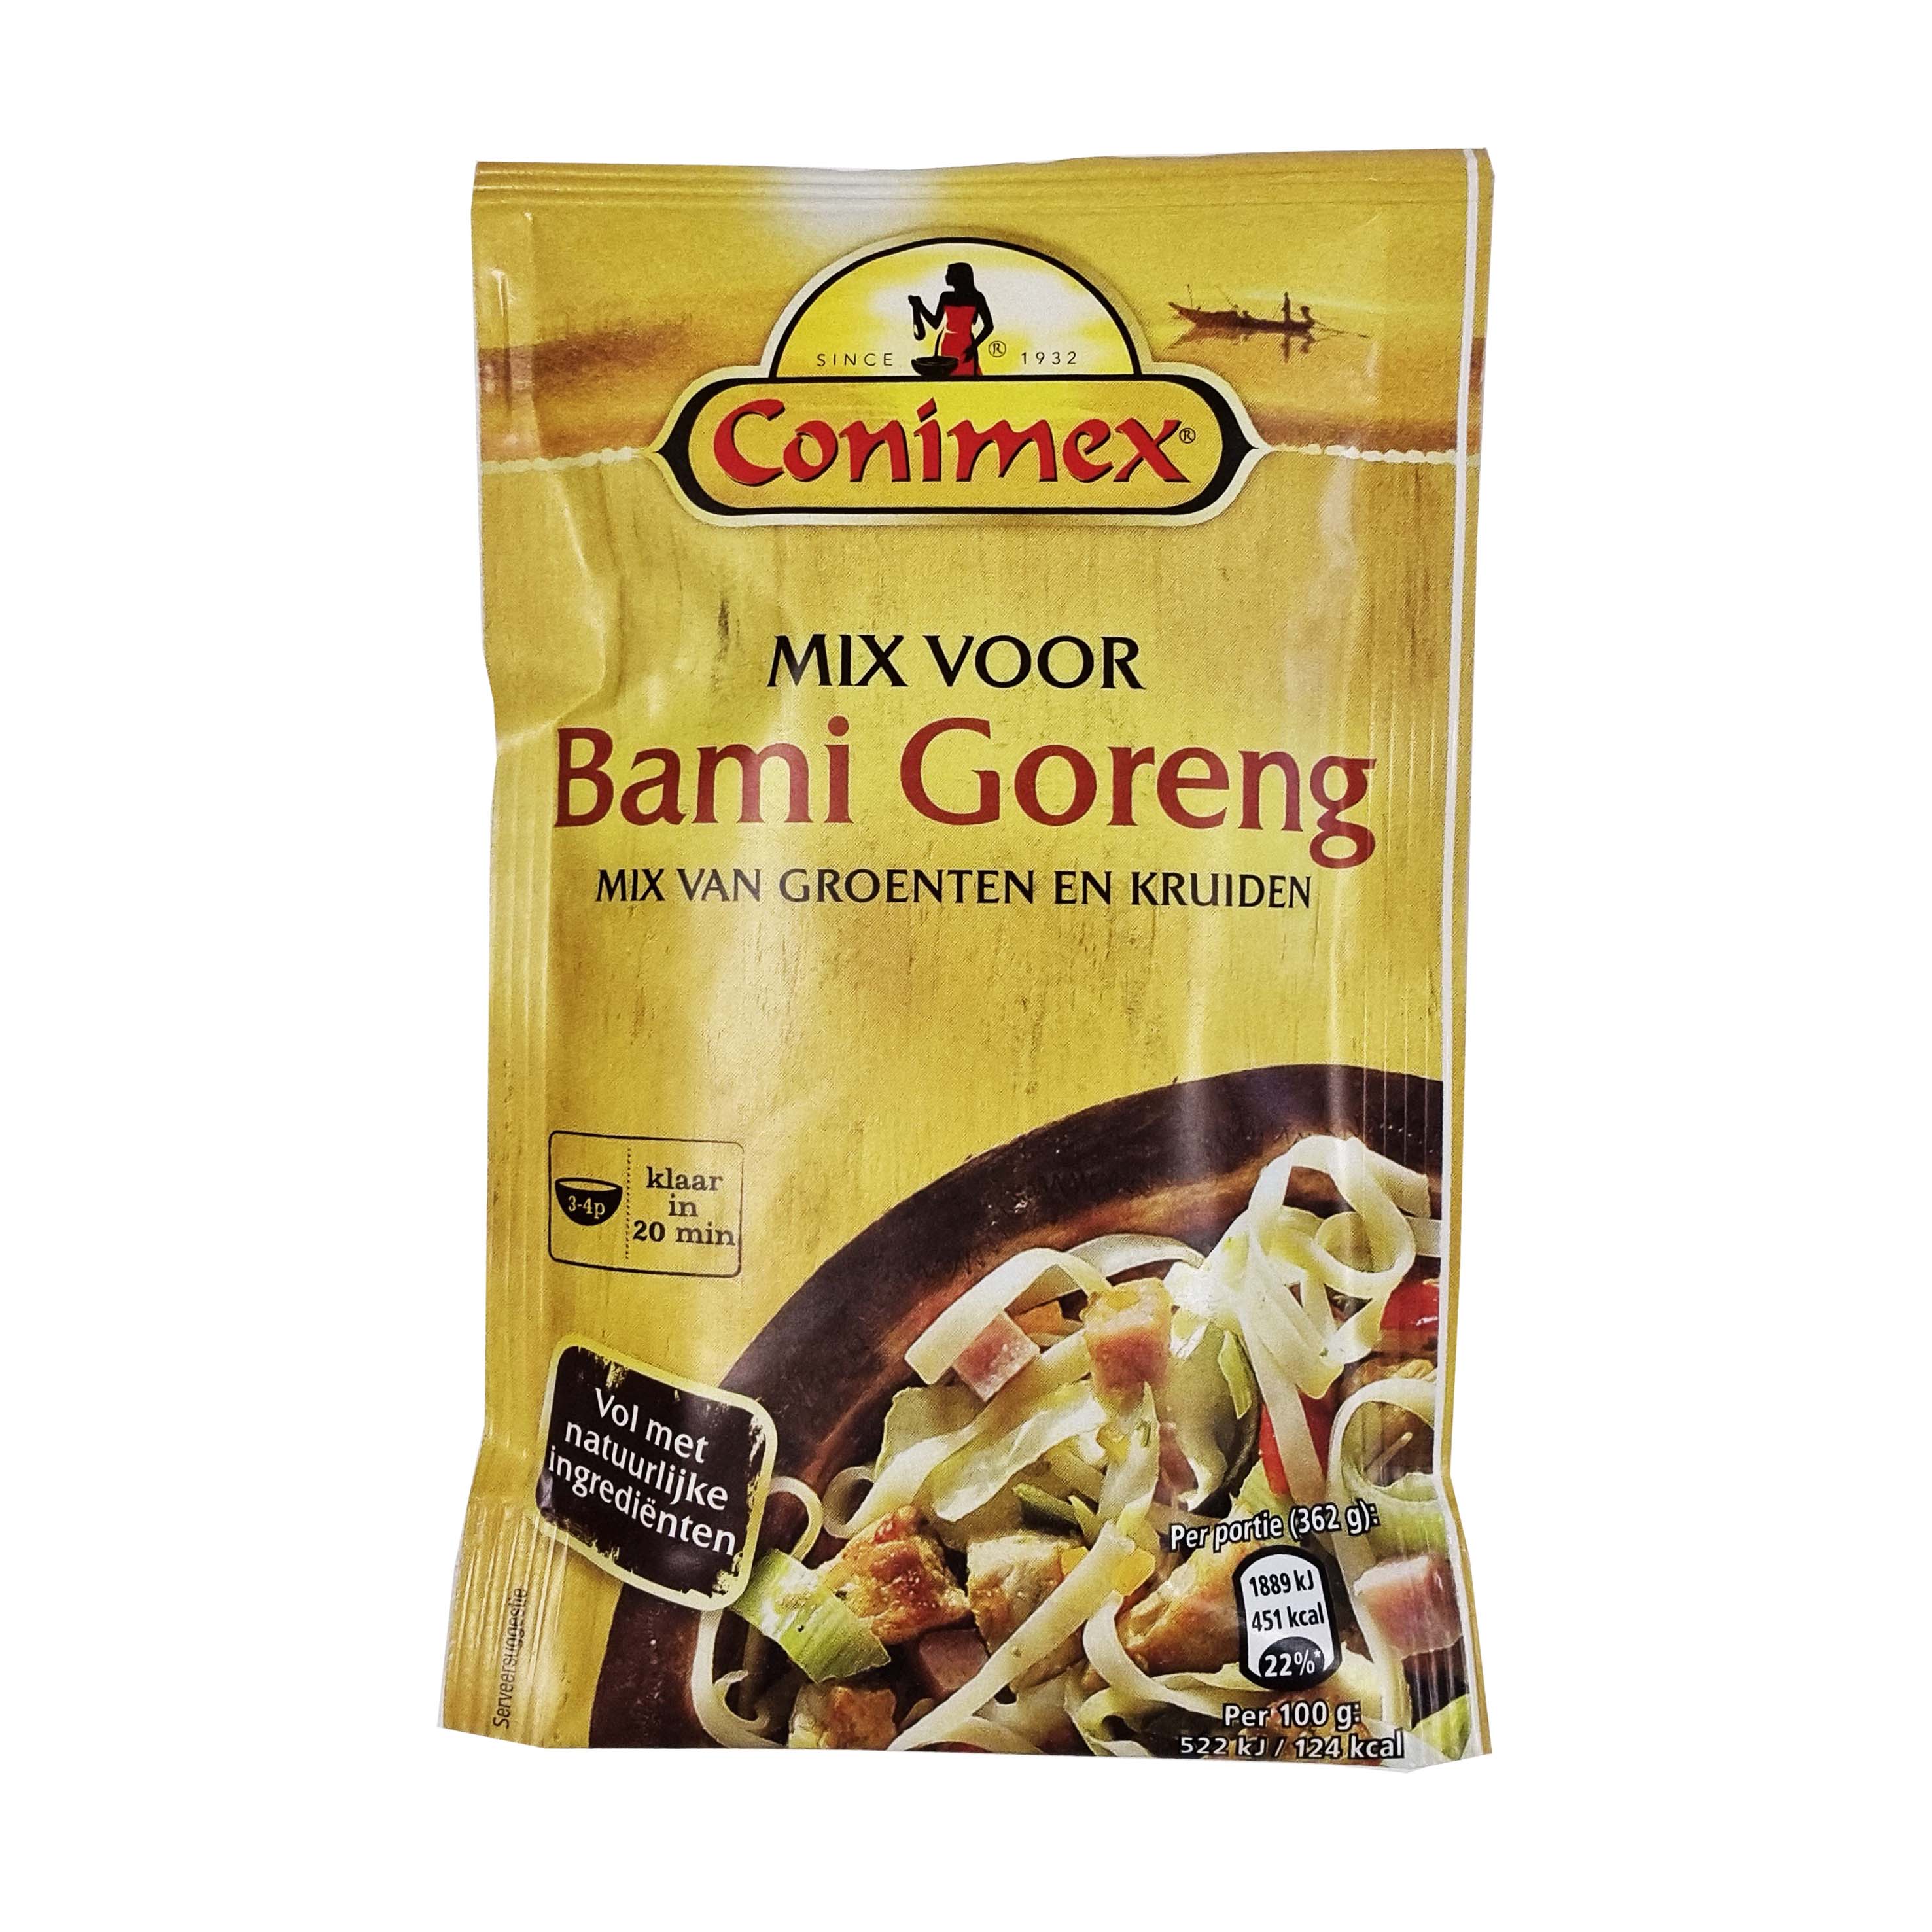 Conimex bahmi goreng mezcla 48 gr